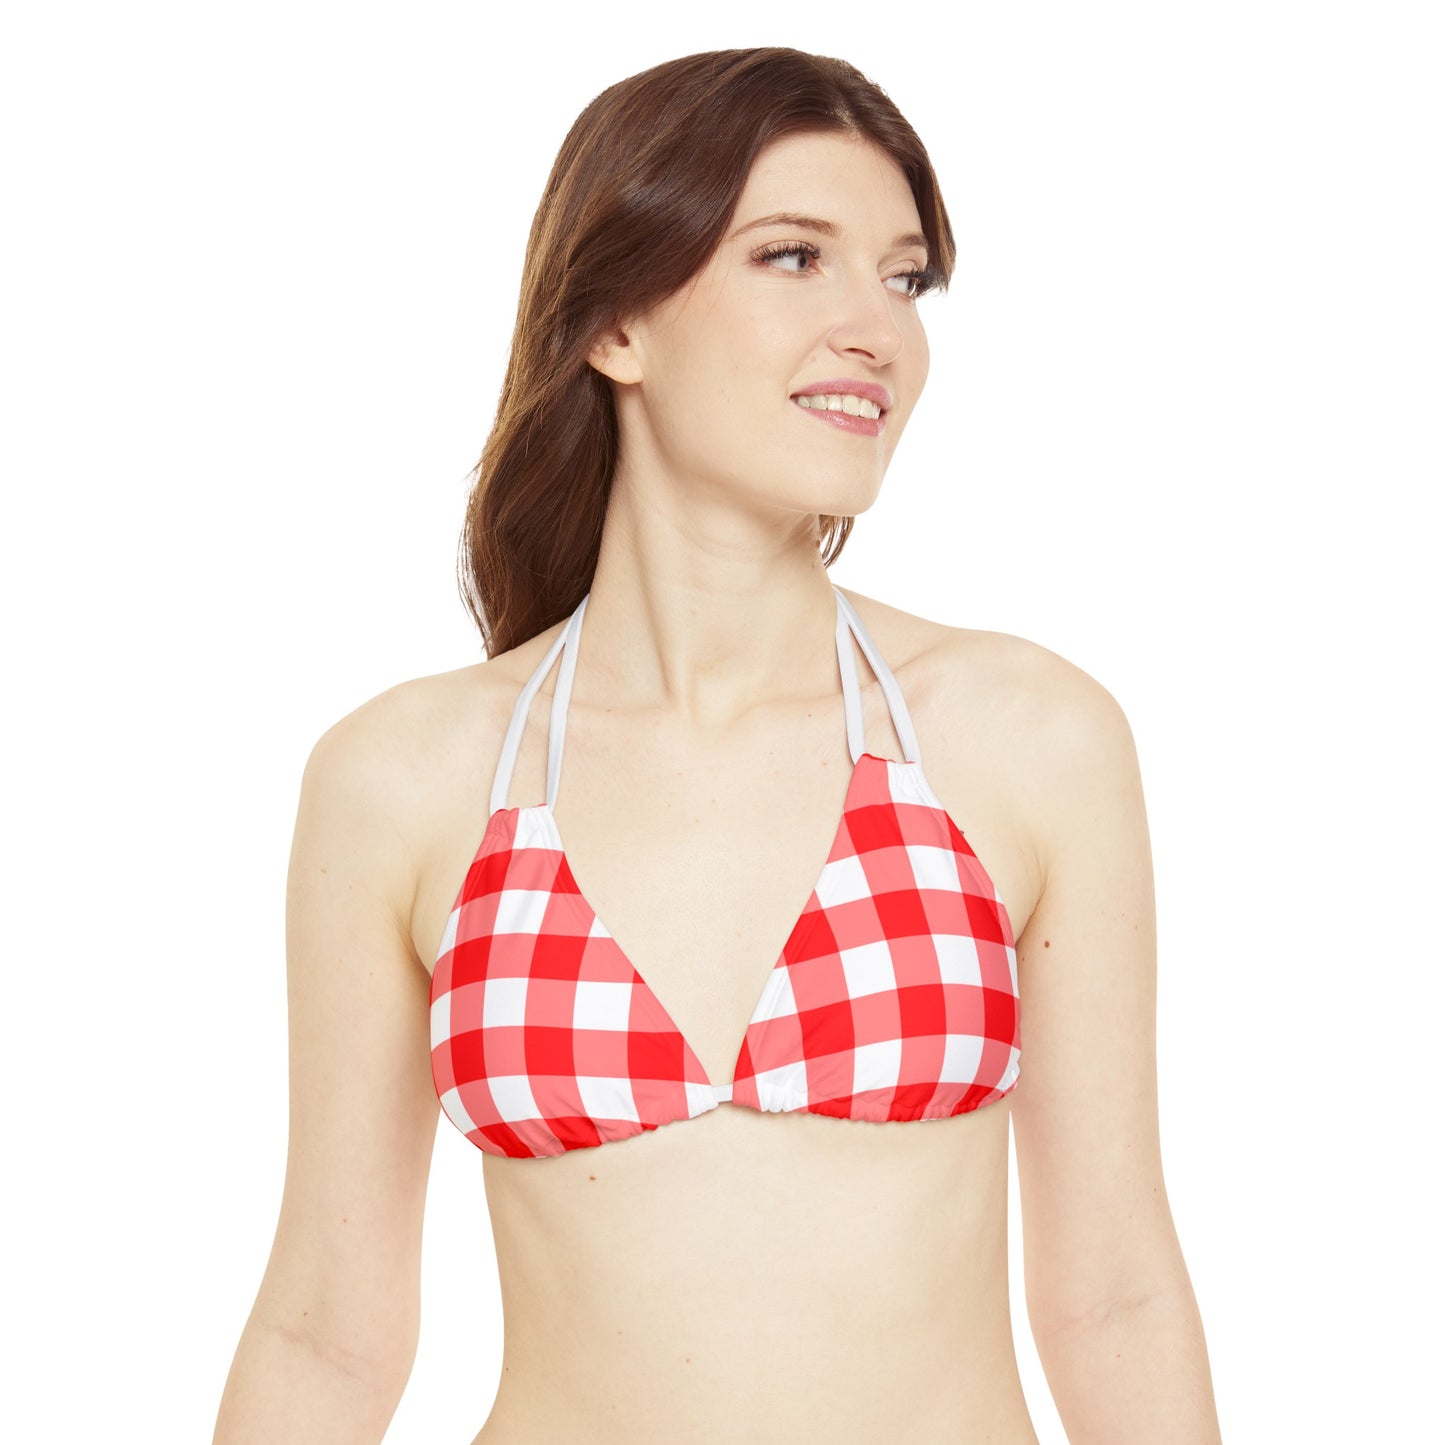 Red and White Gingham Bikini Set, Check Checkered High Waisted Cute Cheeky Bottom String Triangle Top Sexy Swimsuits Women Swimwear